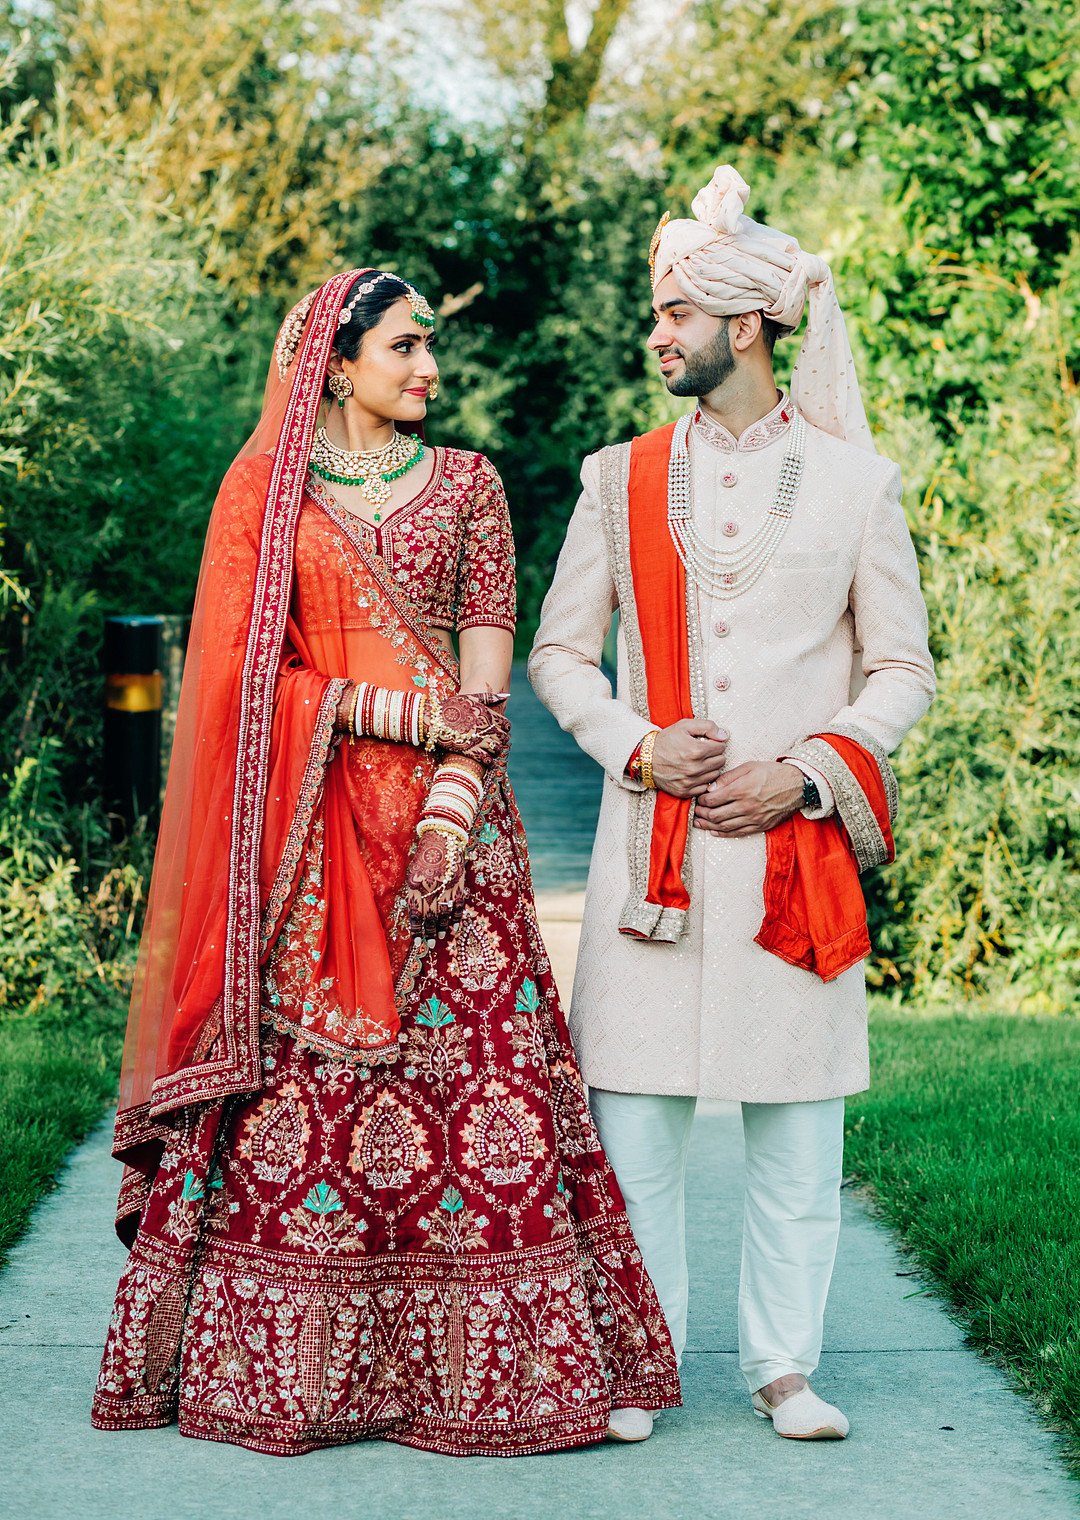 Modi_Shah_DARS Photography_147 Krina & Parth's Wedding by DARS Photography_low.jpg